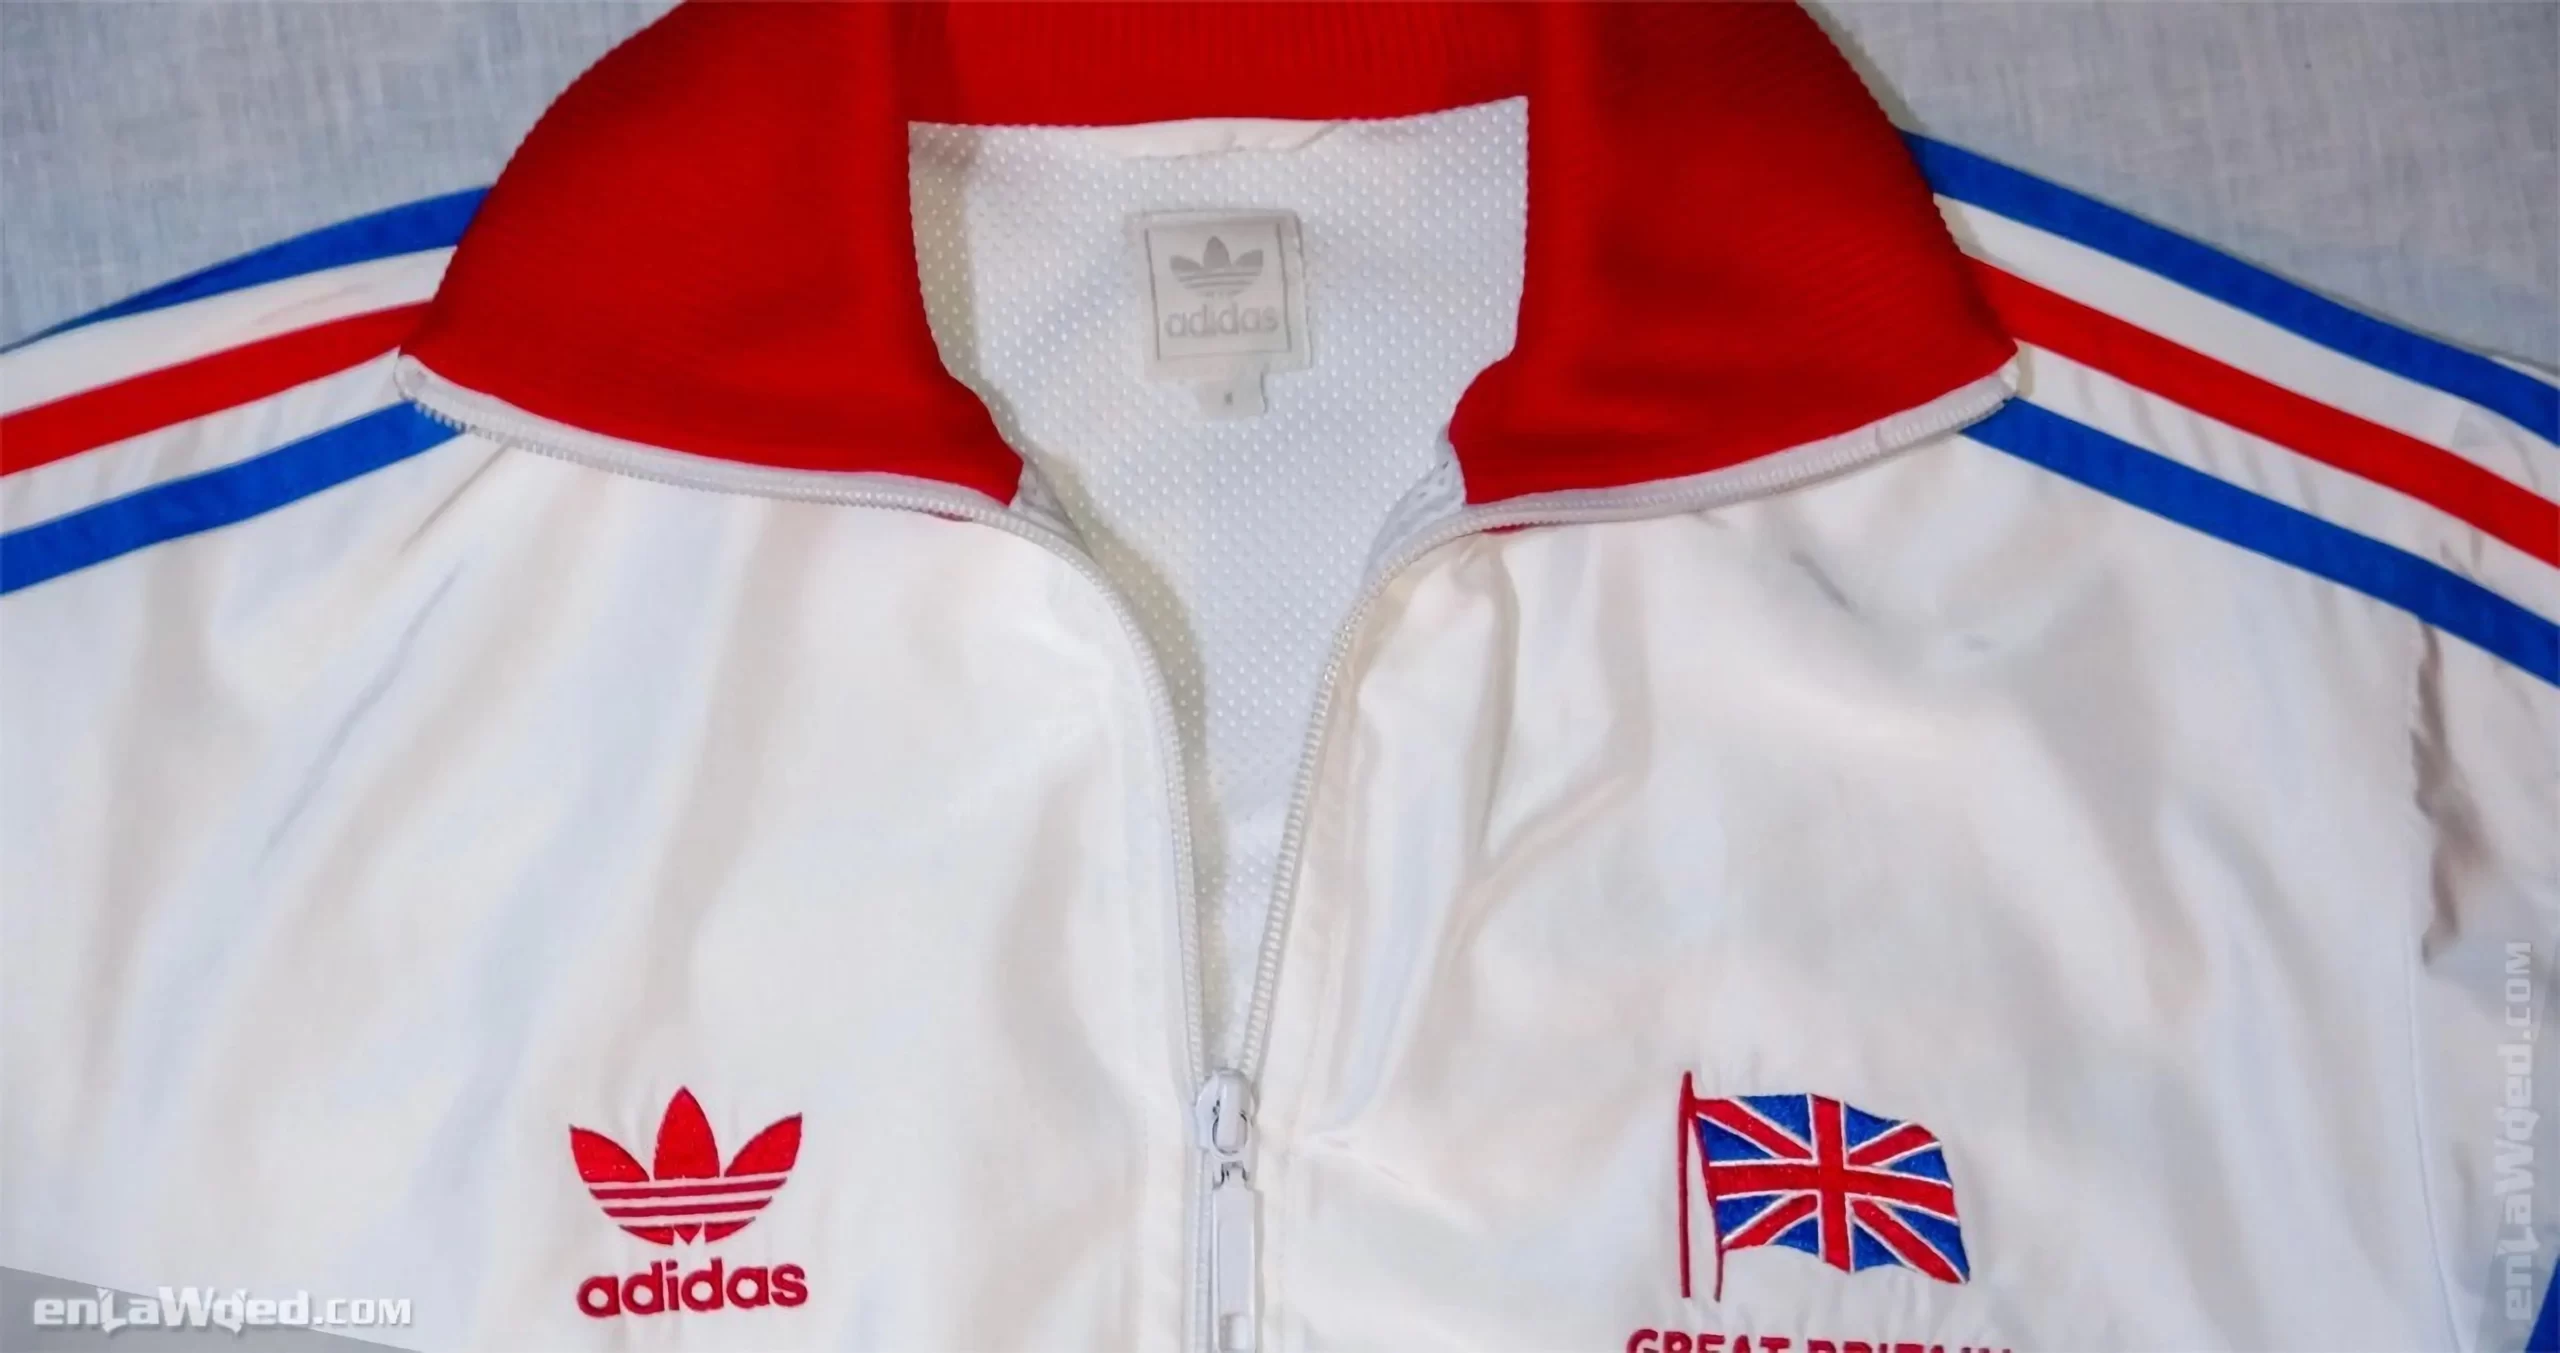 Men’s 2005 Great Britain Olympic ’84 TT by Adidas: Supported (EnLawded.com file #lmcemdamshdeltbfggm)